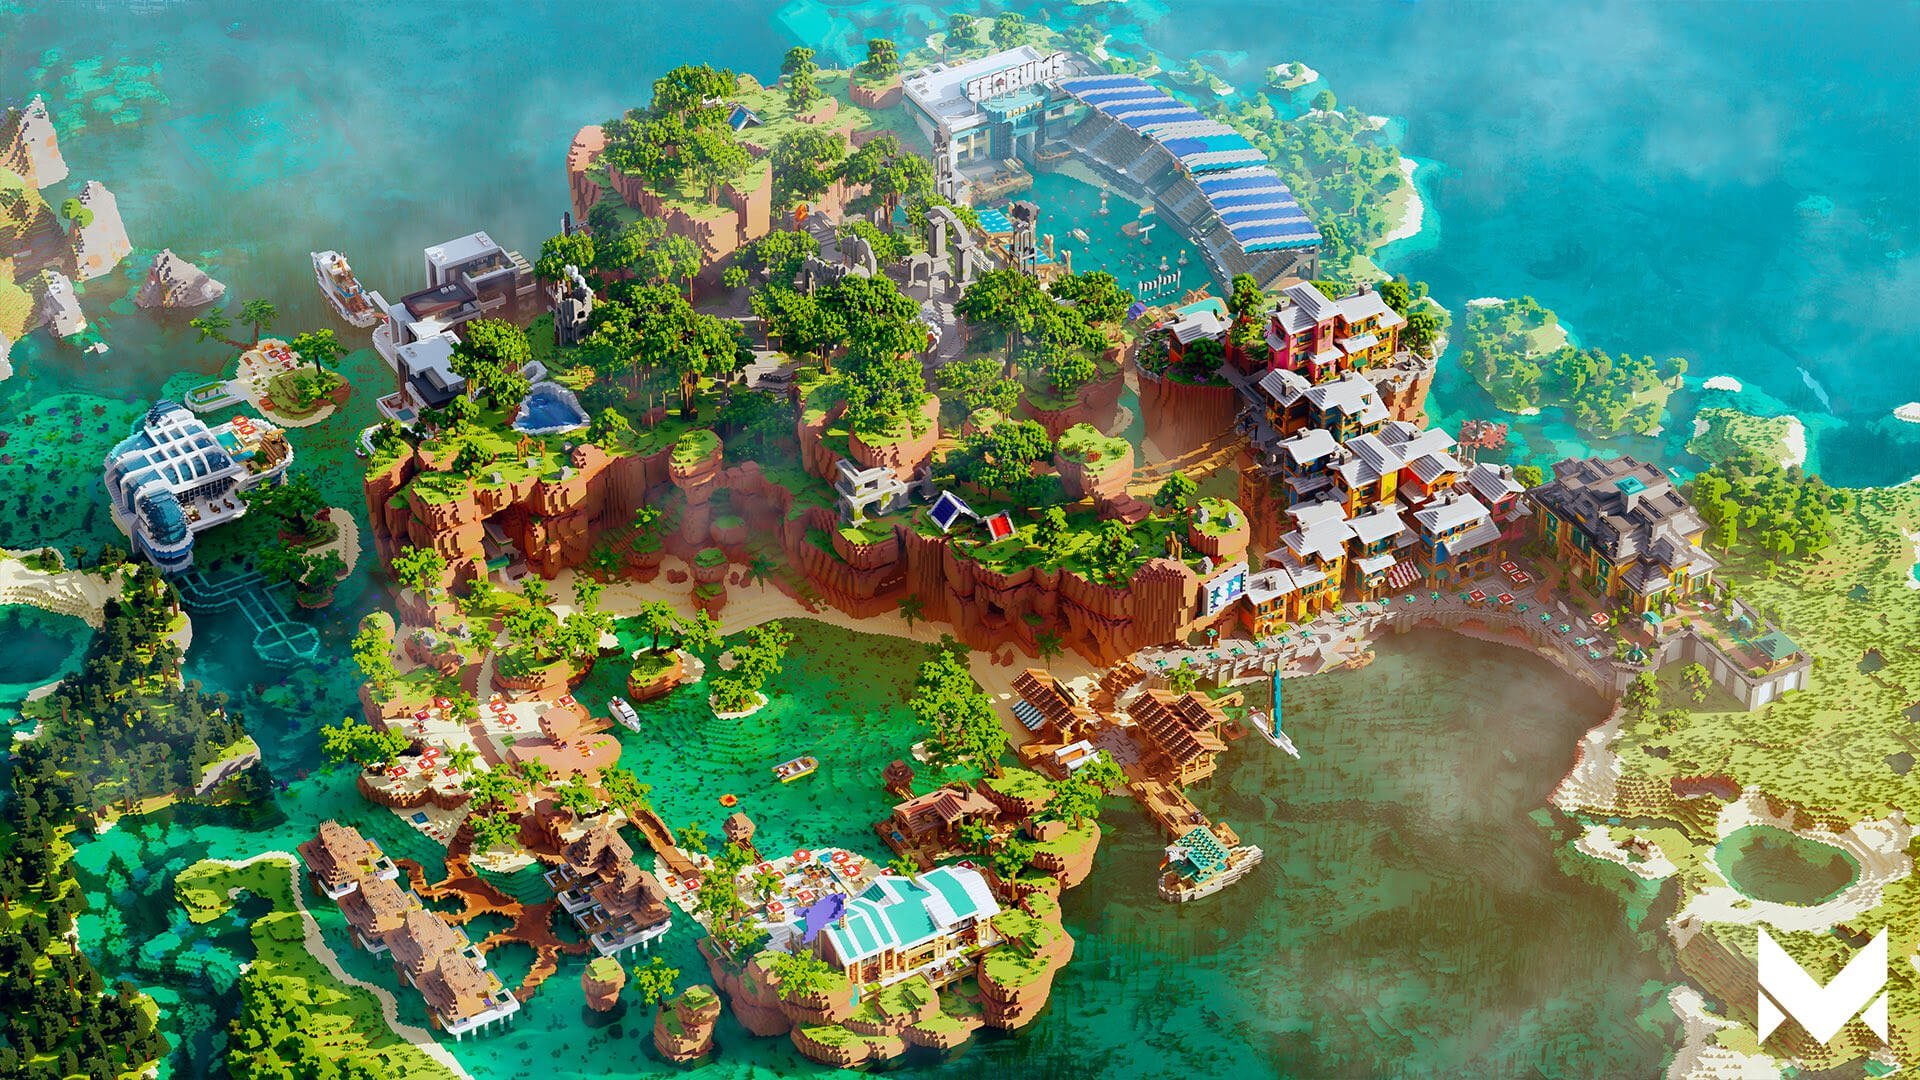 The Seabums Conservation Coast map in Minecraft, created alongside Meraki